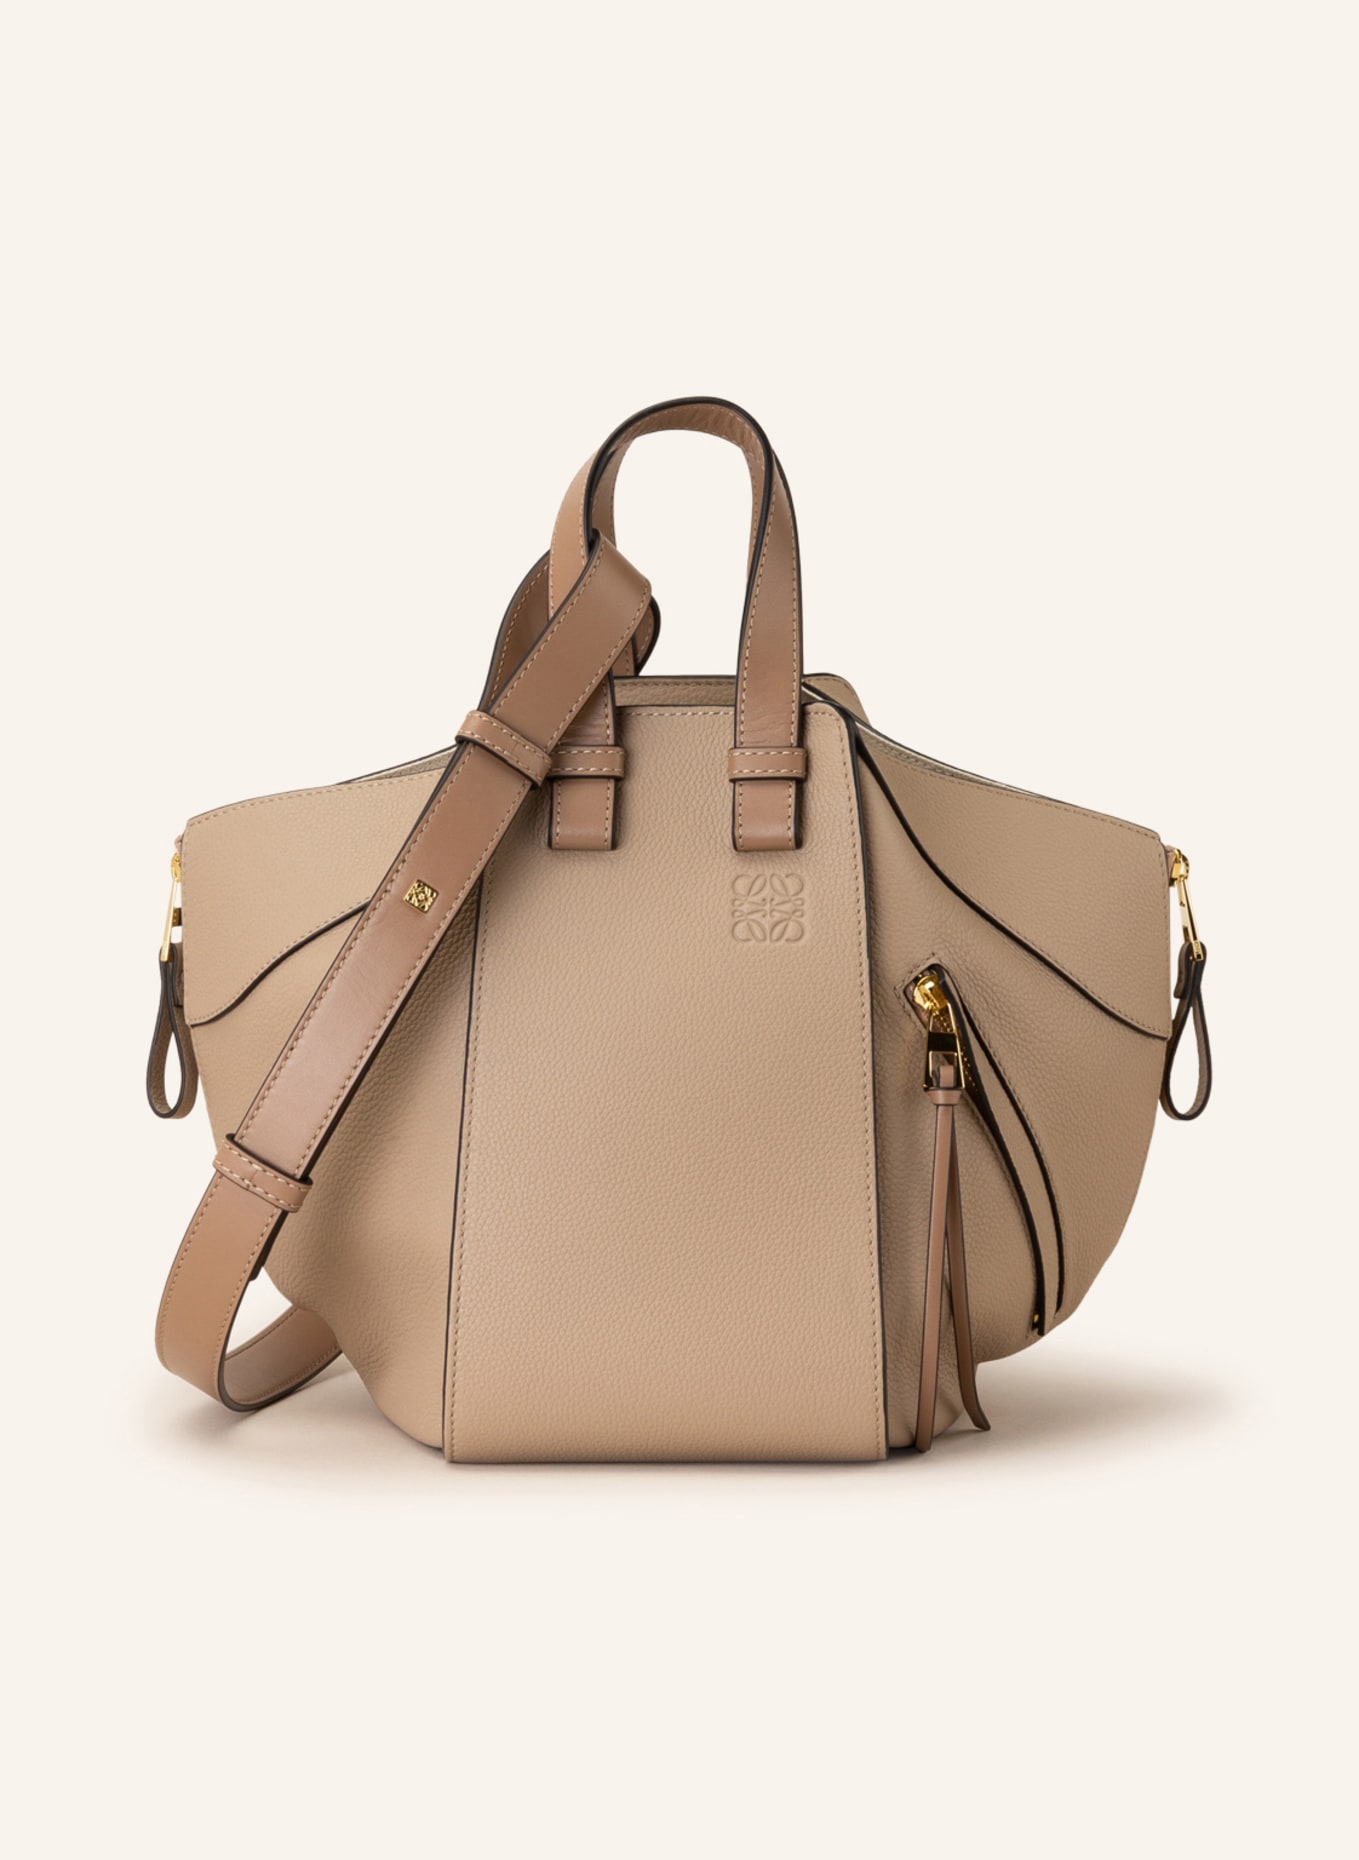 LOEWE Handtasche HAMMOCK SMALL, Farbe: BEIGE (Bild 1)